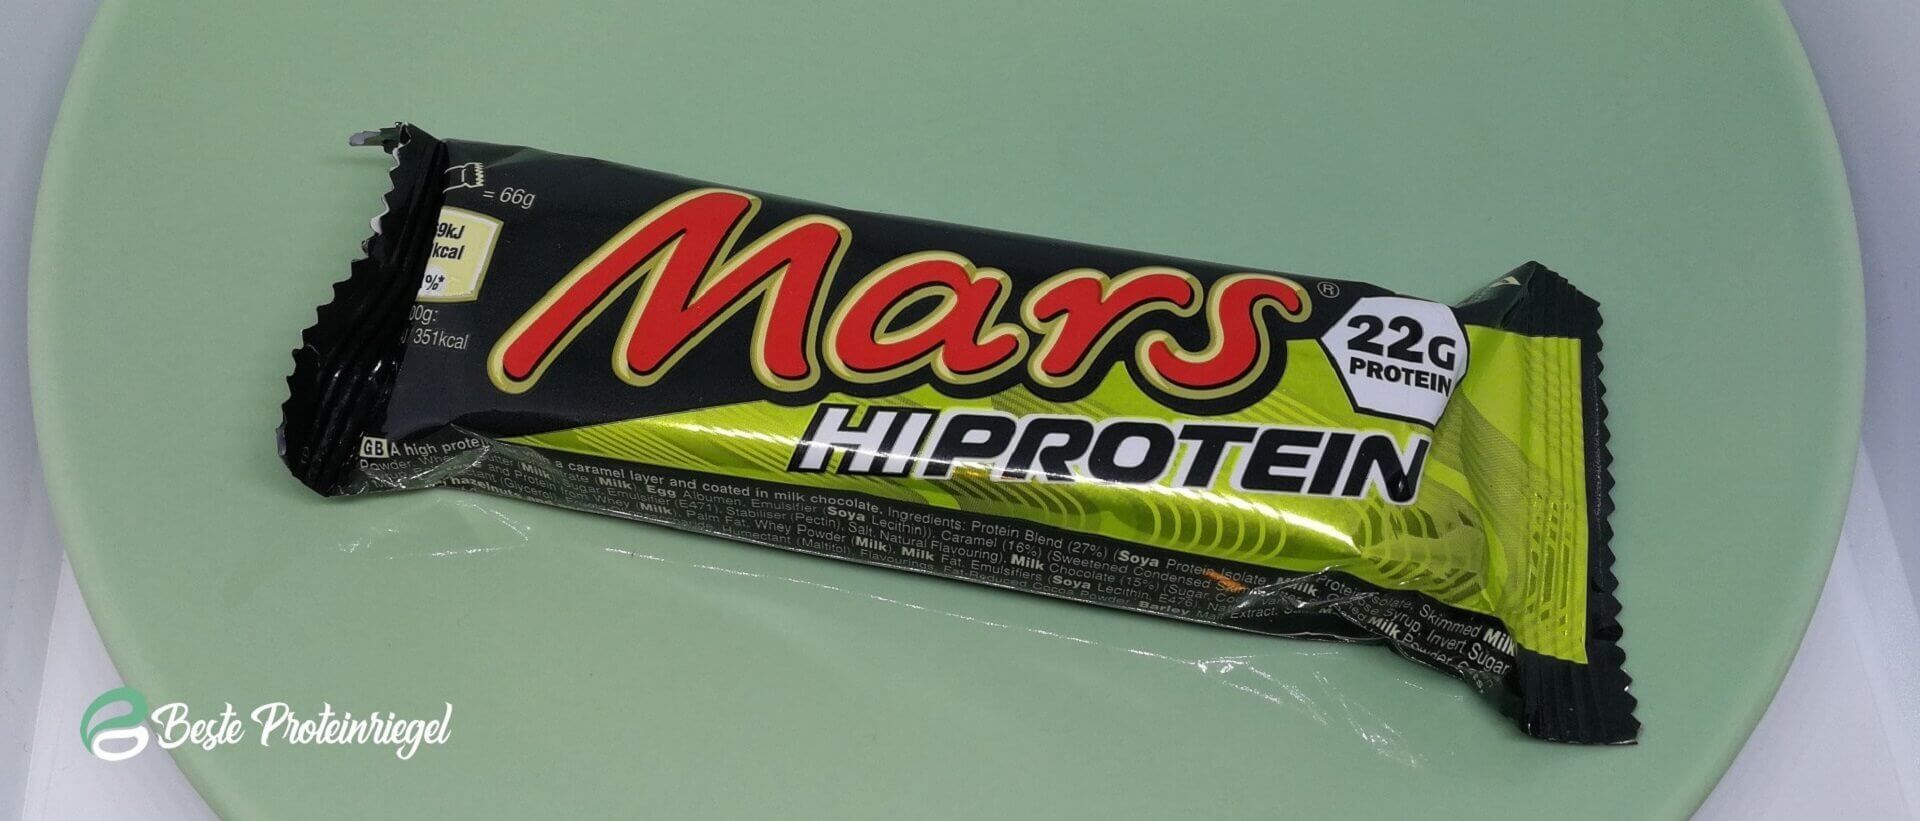 Mars HiProtein Verpackung